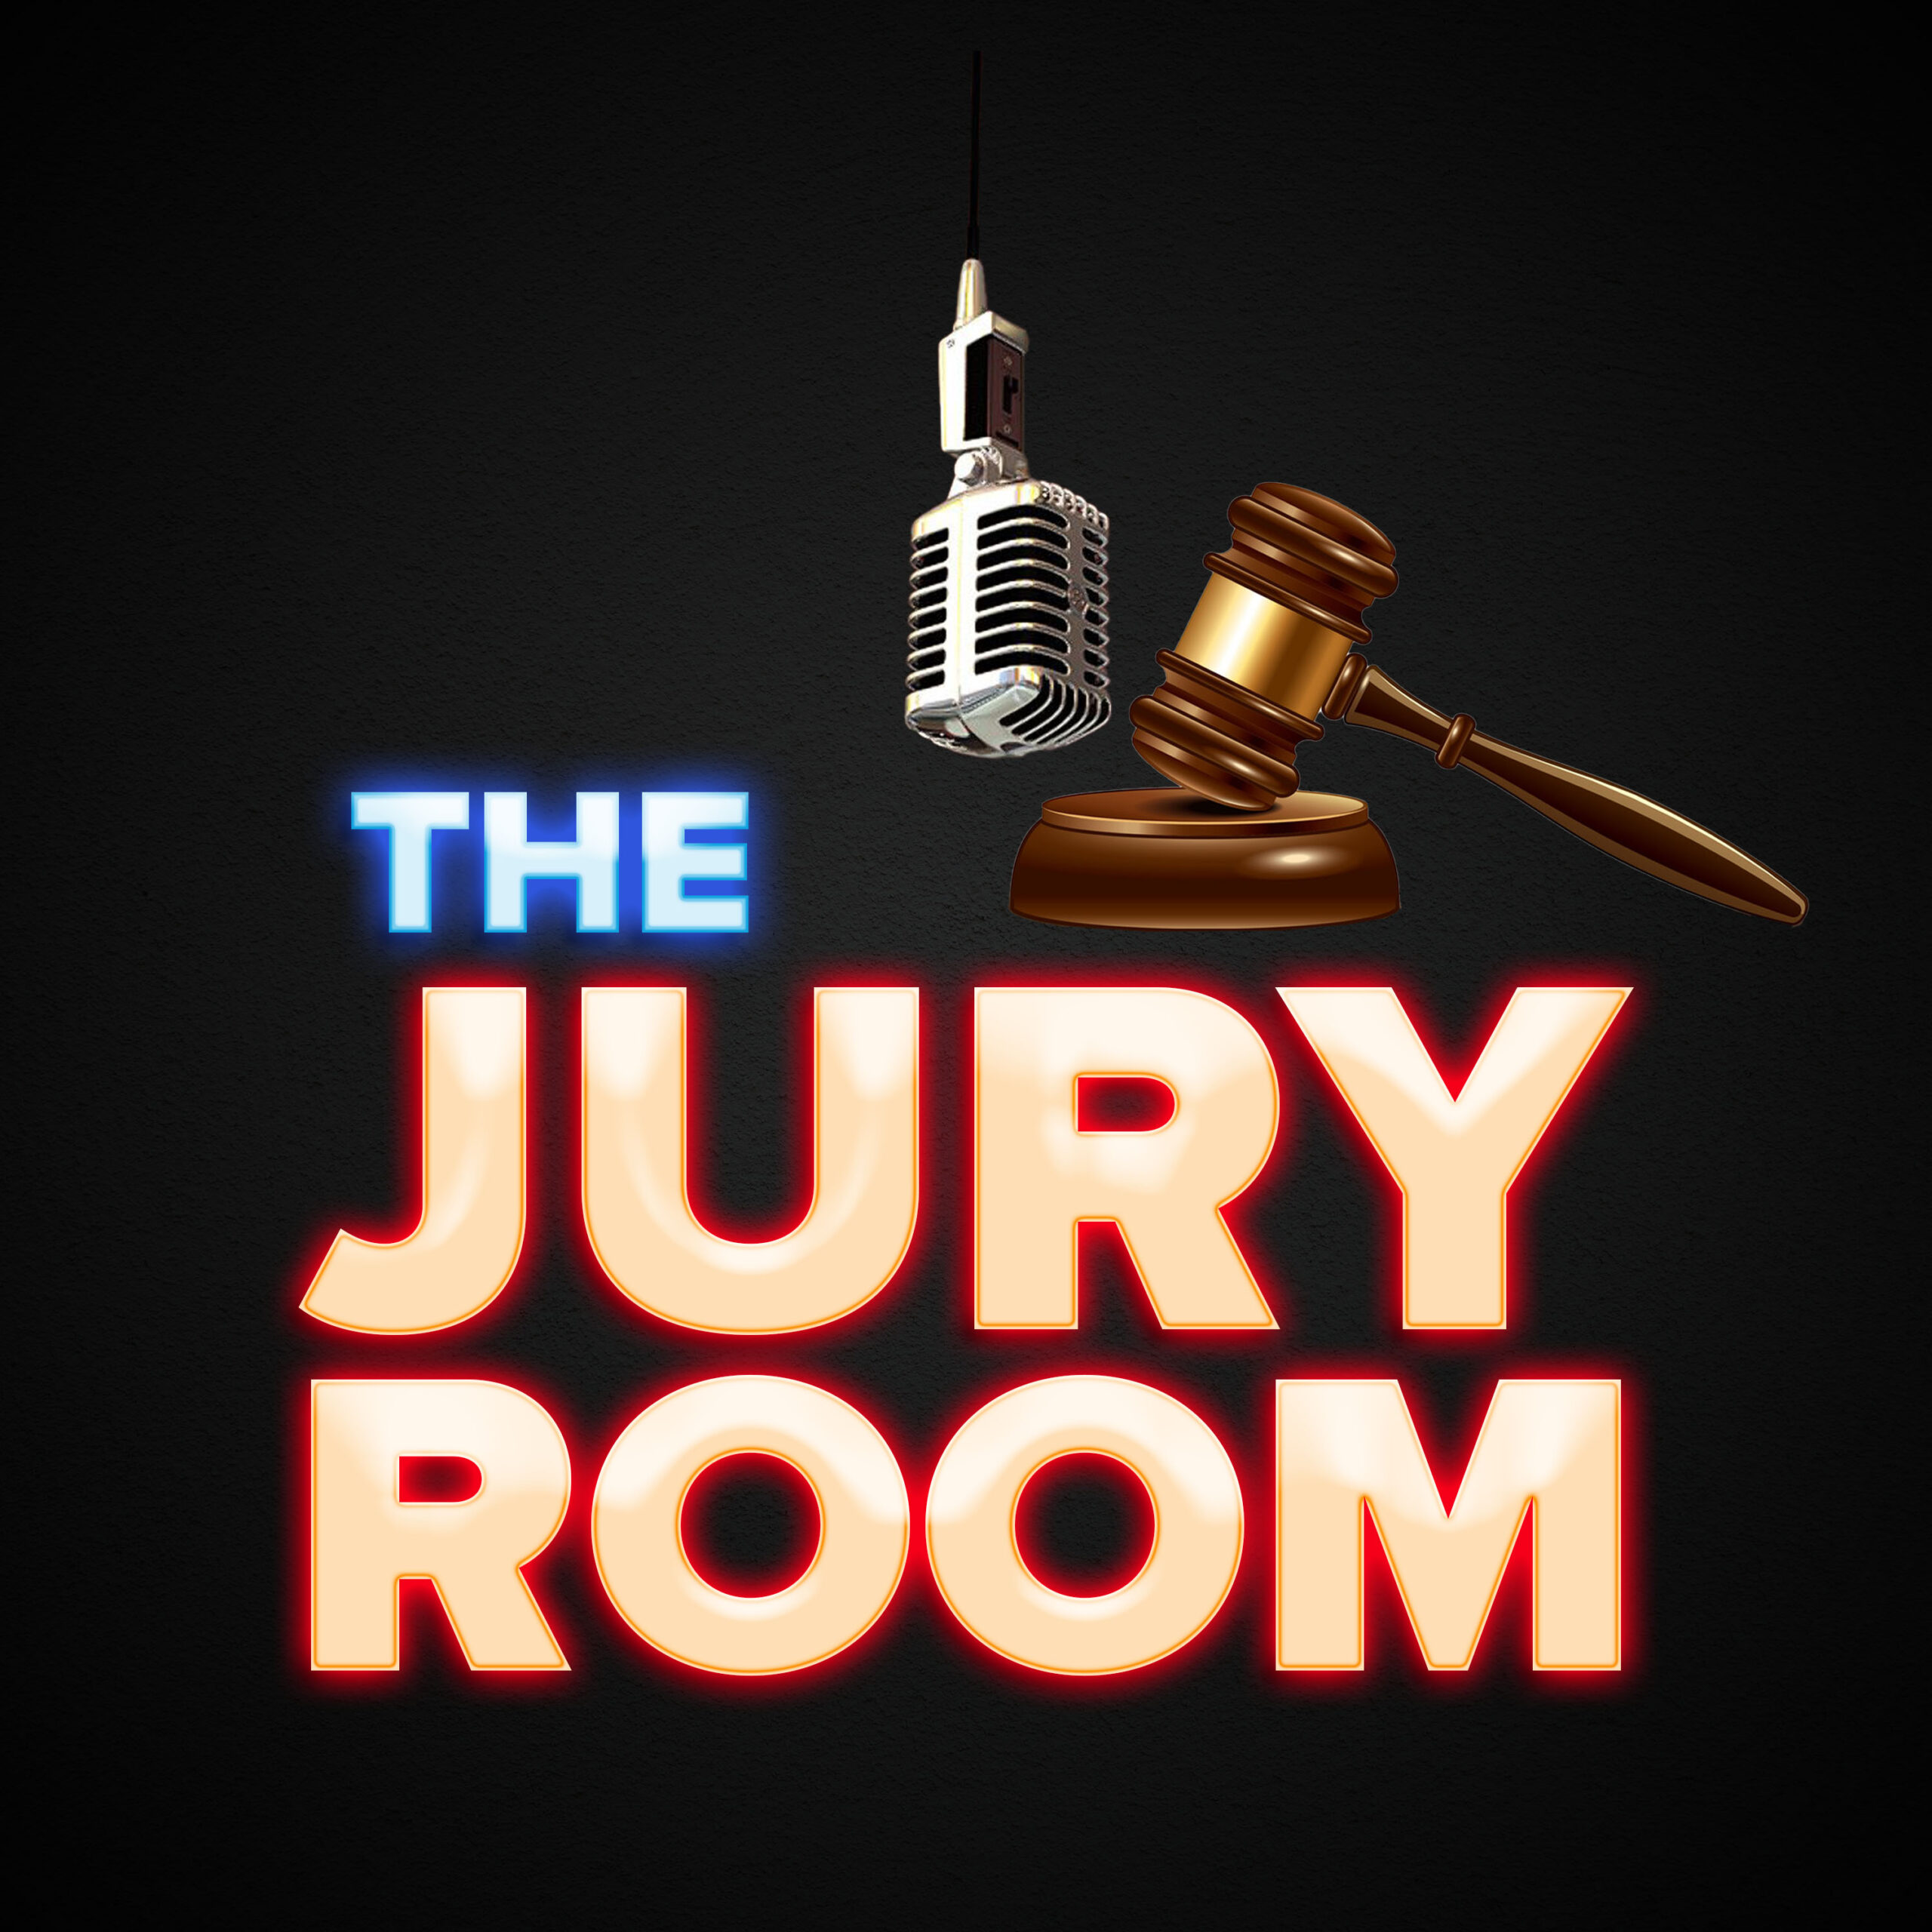 Jonestown- The Peoples Temple by the Jury Room